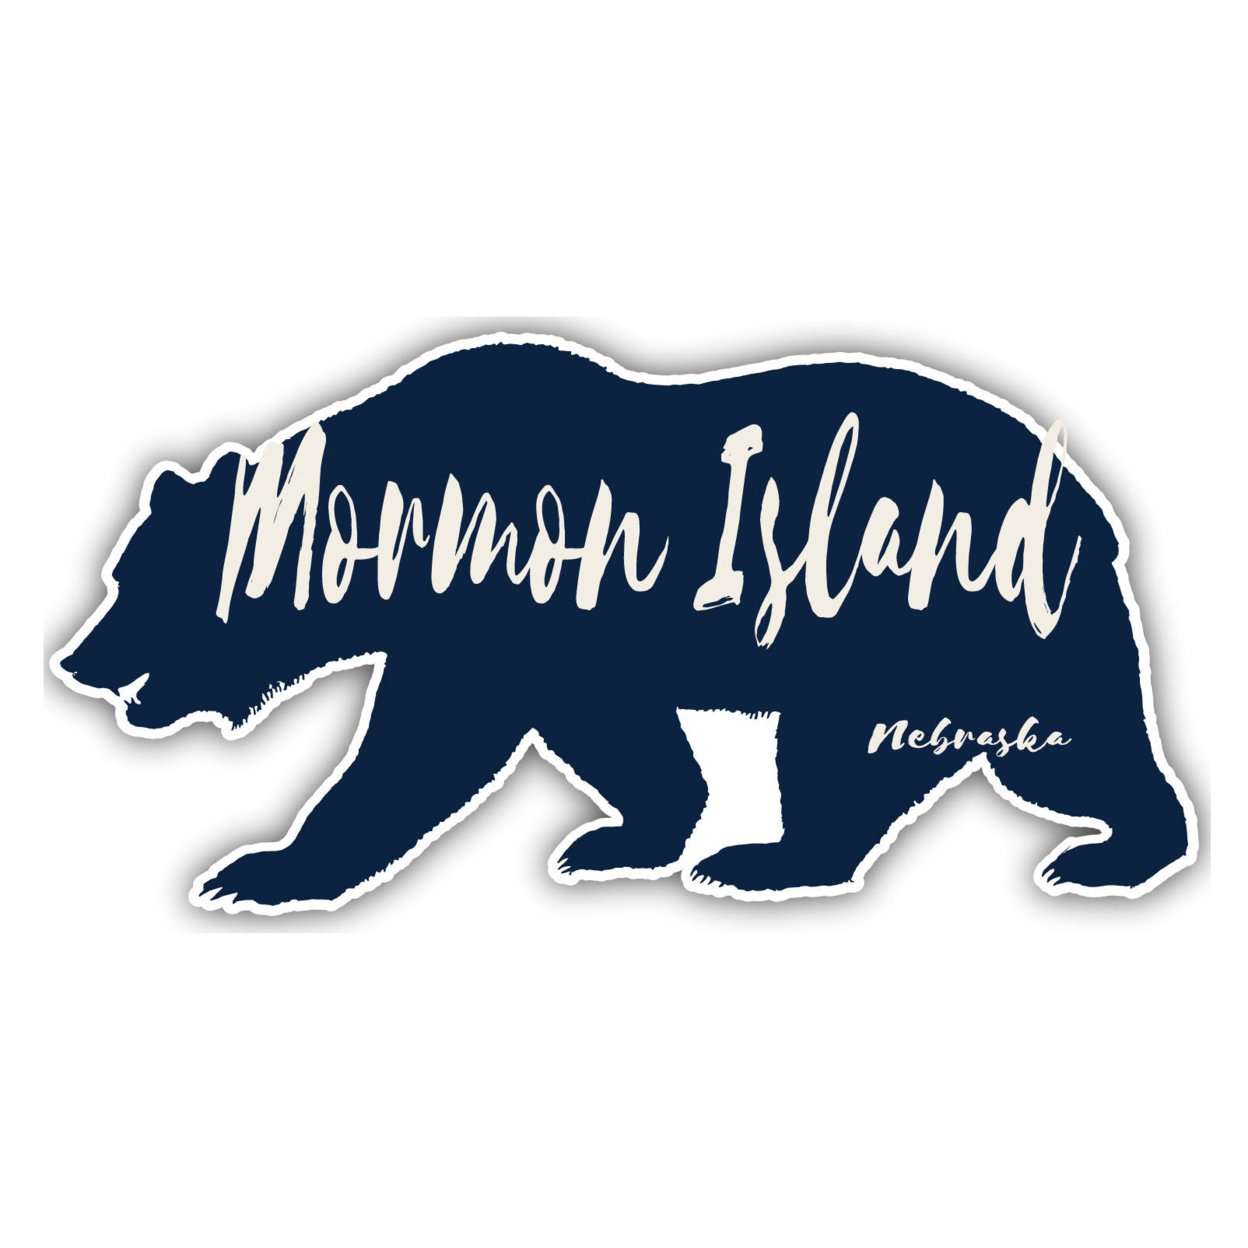 Mormon Island Nebraska Souvenir Decorative Stickers (Choose Theme And Size) - Single Unit, 2-Inch, Bear